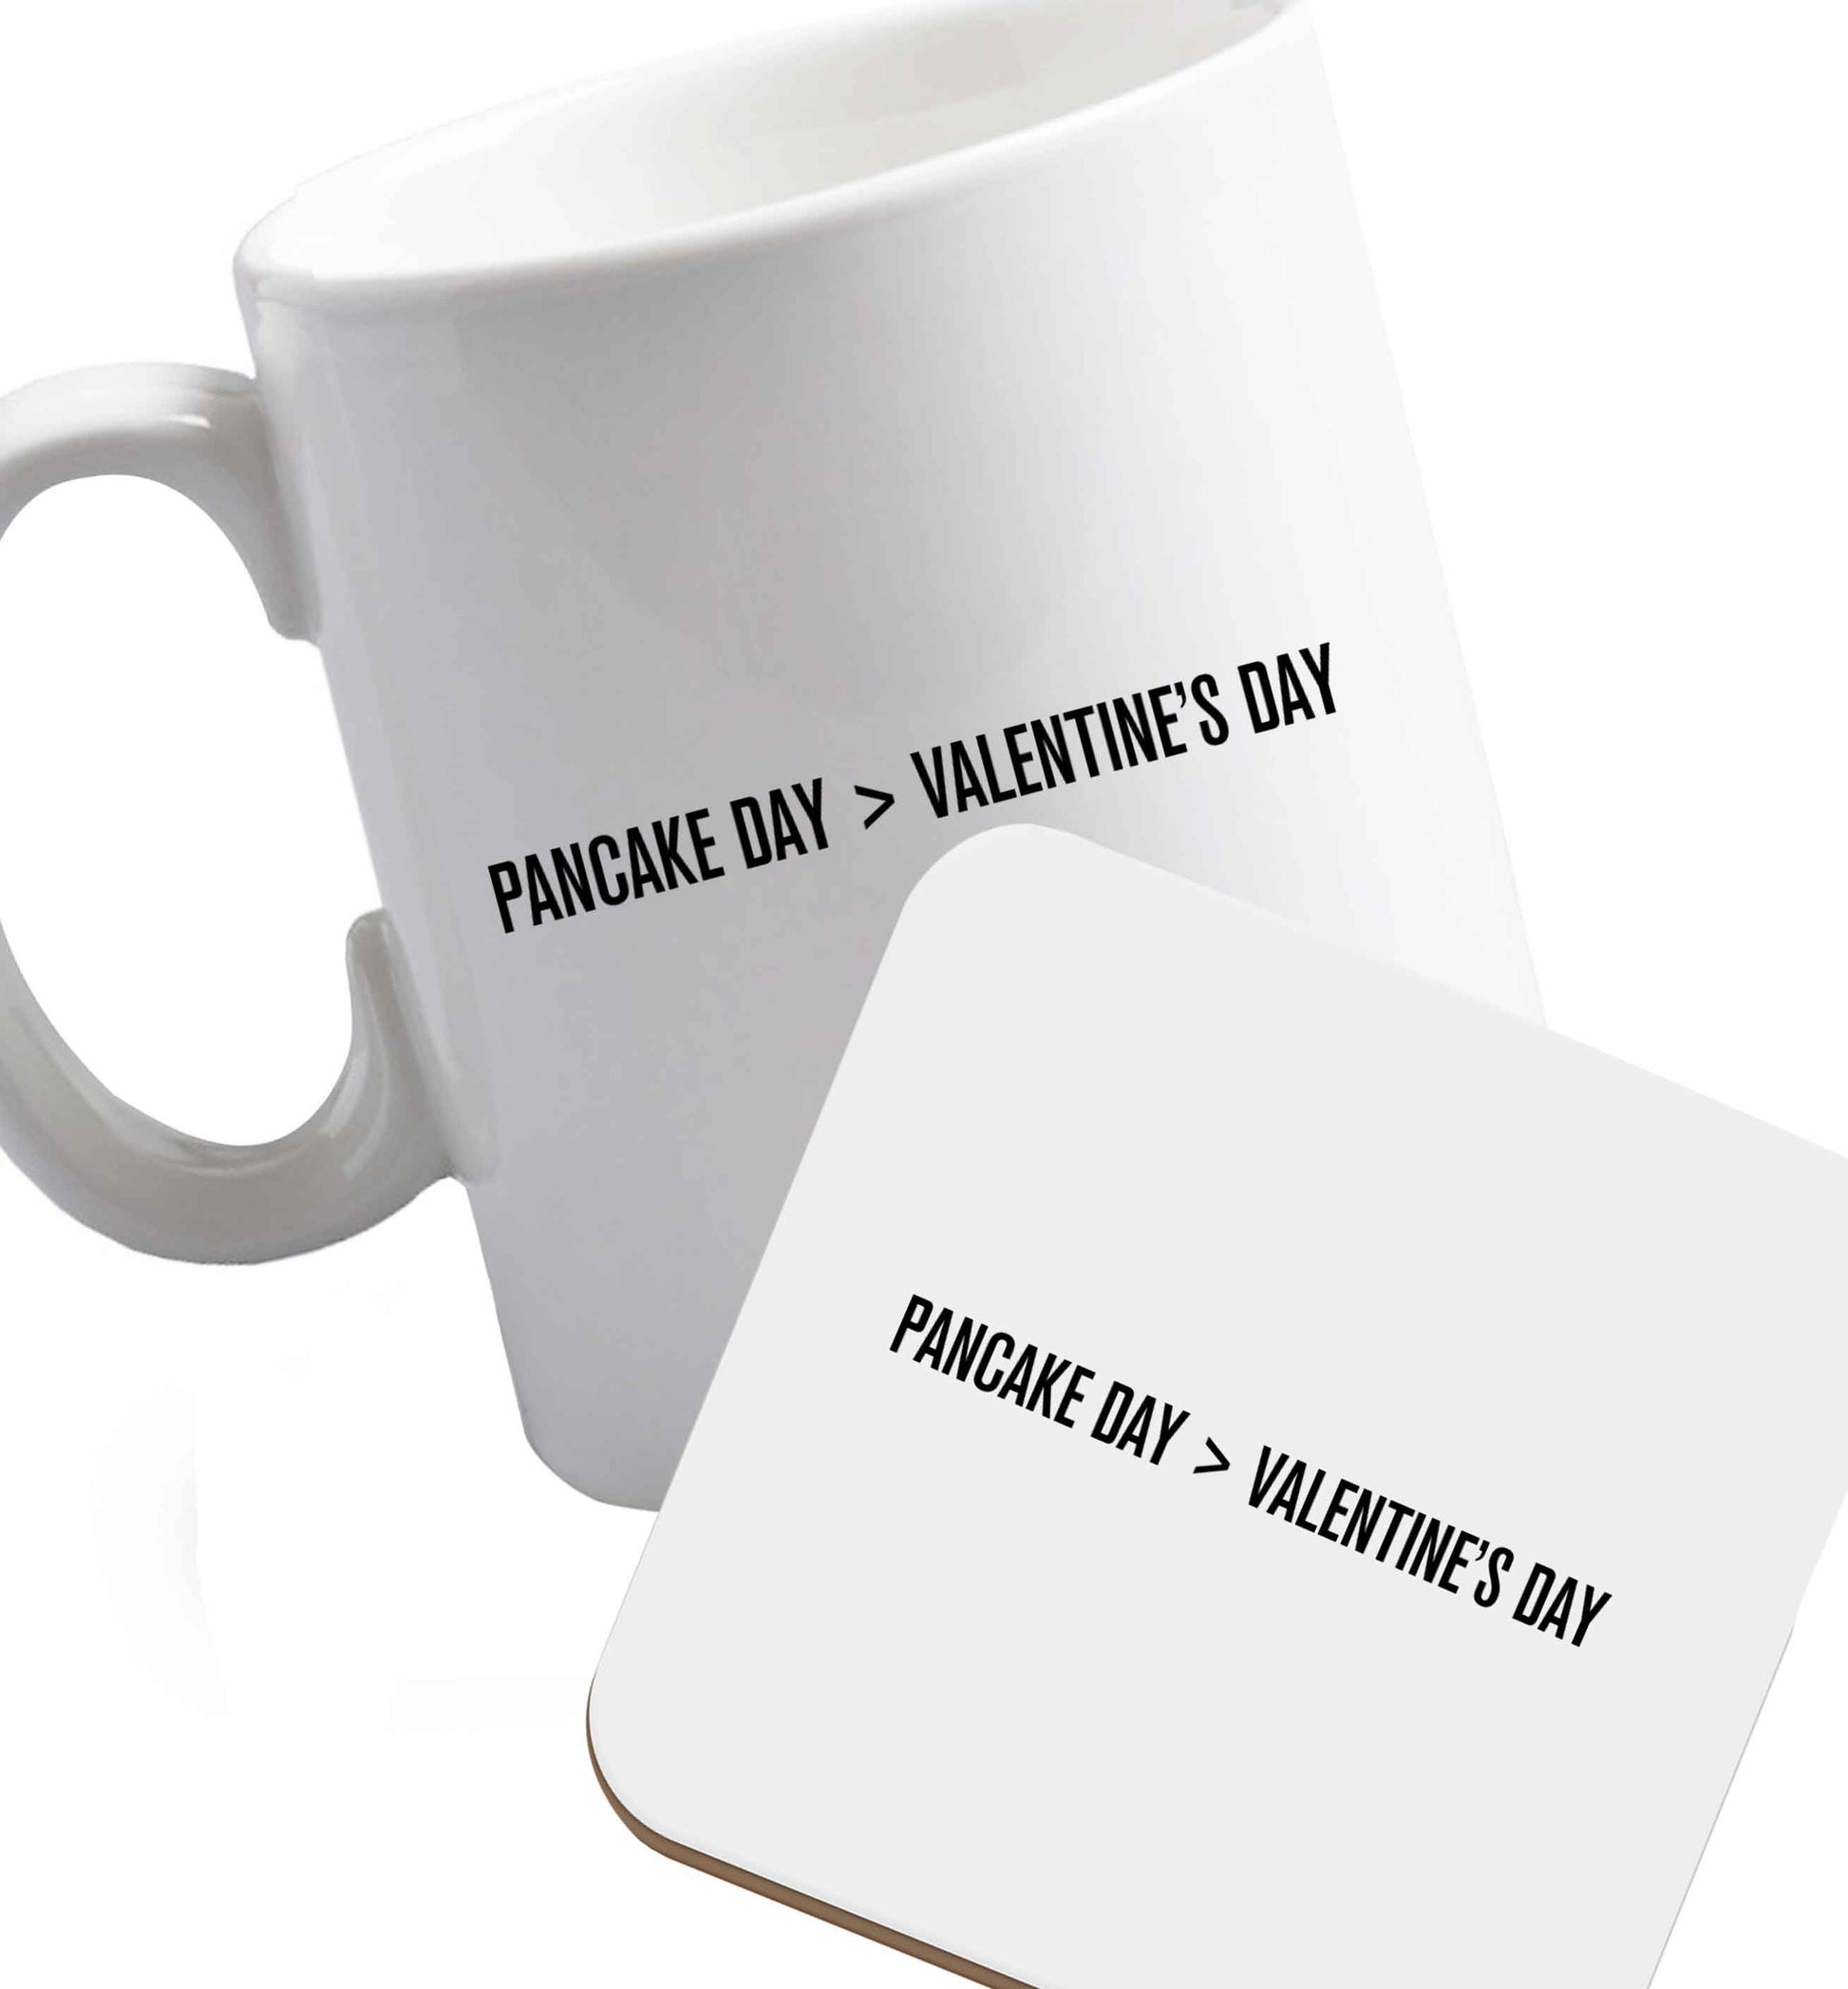 10 oz Pancake day > valentines day ceramic mug and coaster set right handed